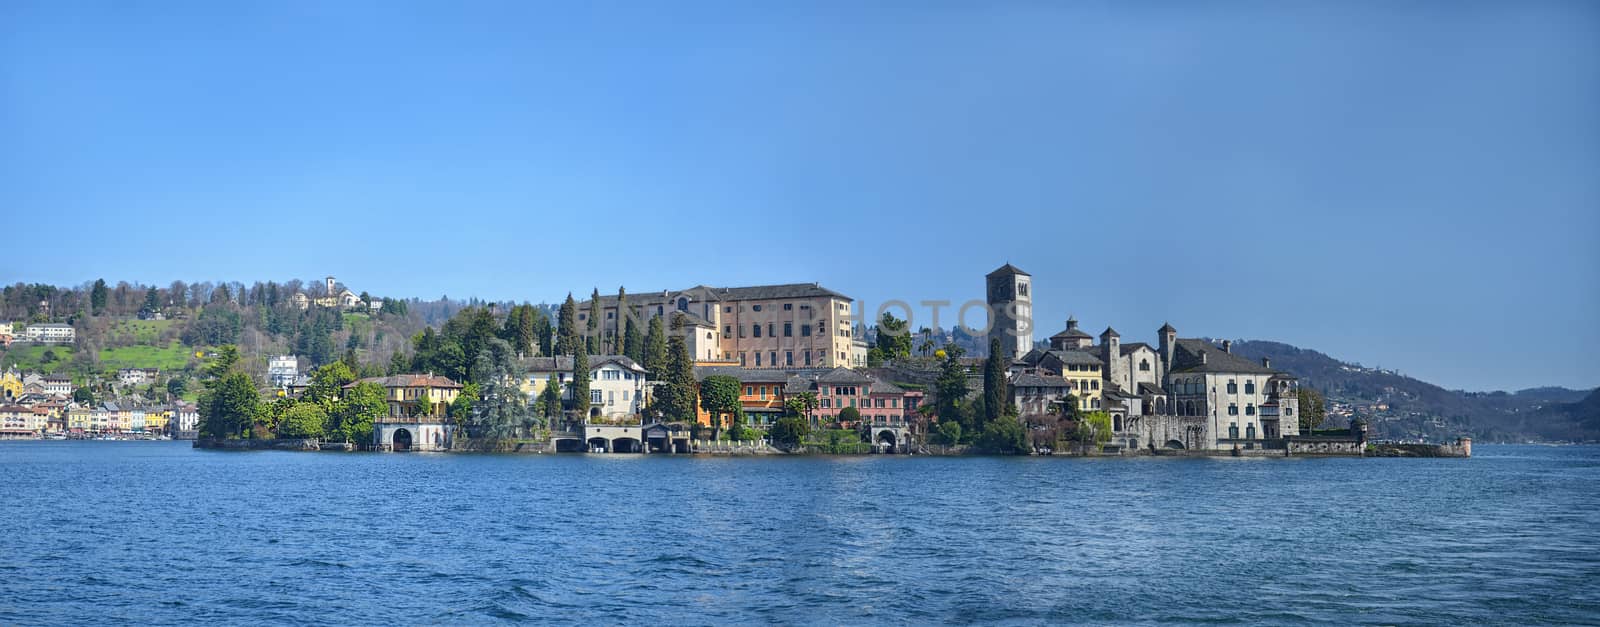 Panorama of San Giulio island on Lake Orta in northern Italy, lakes district